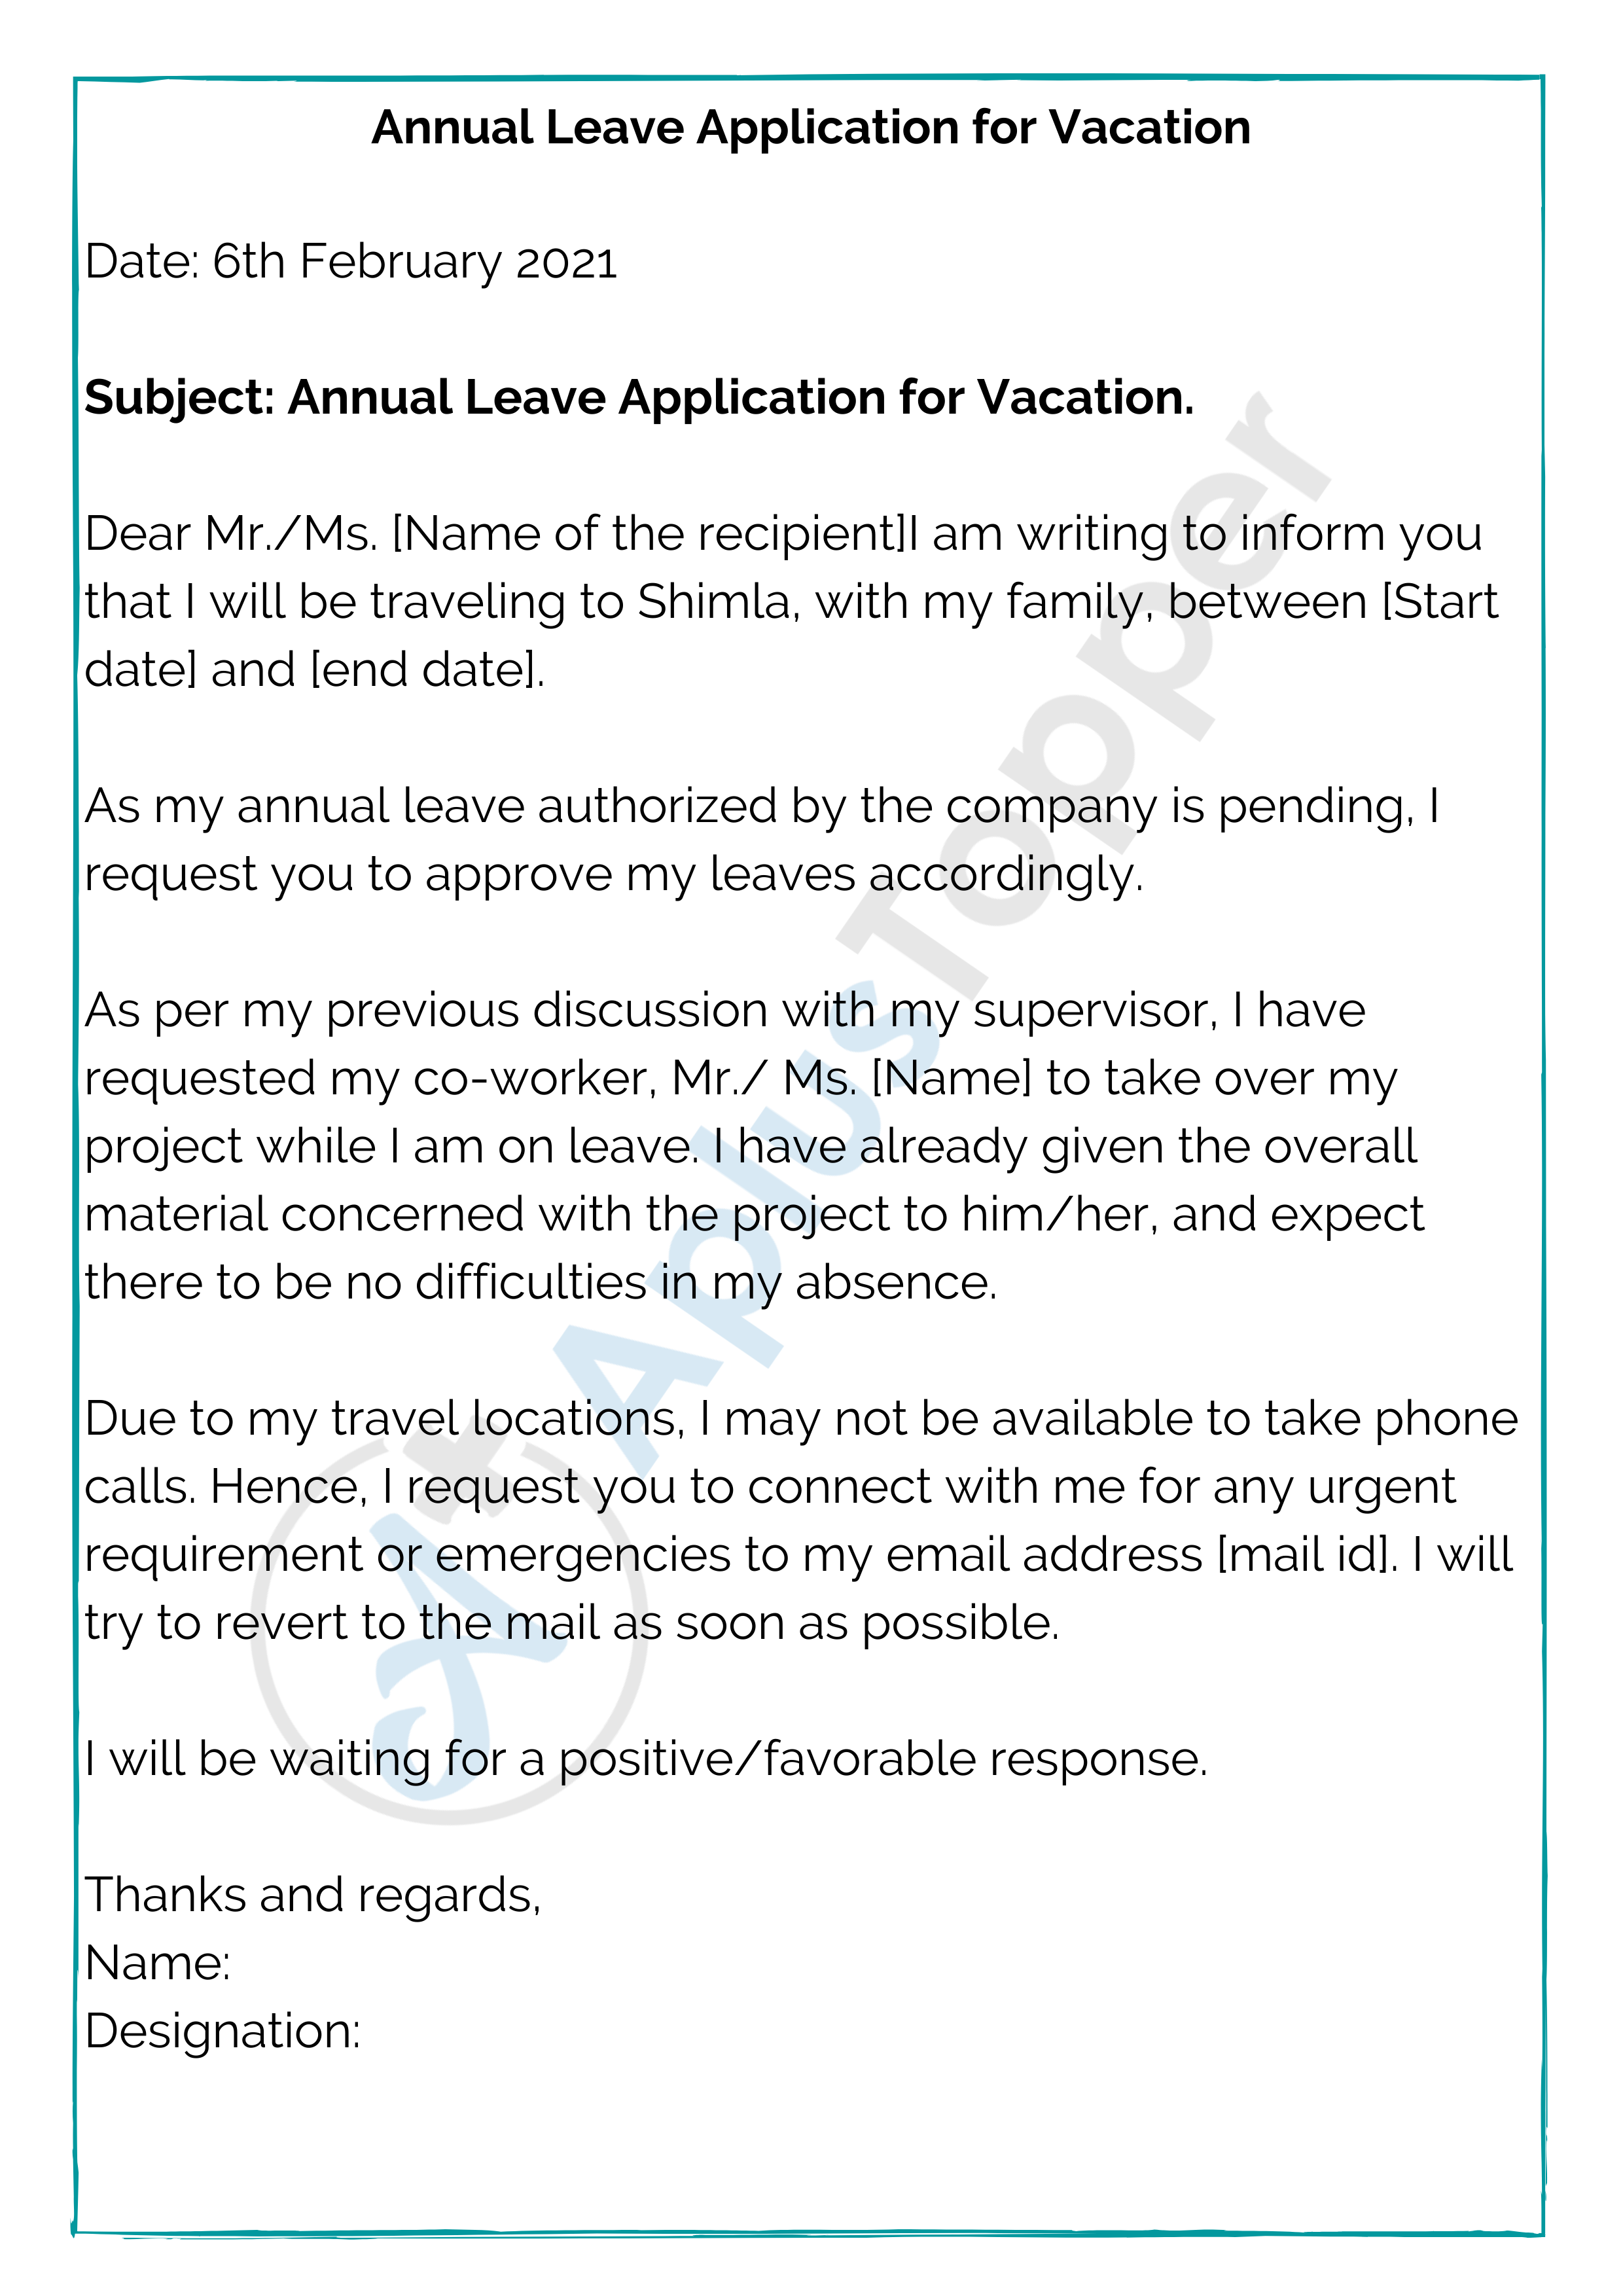 application letter for hostel leave